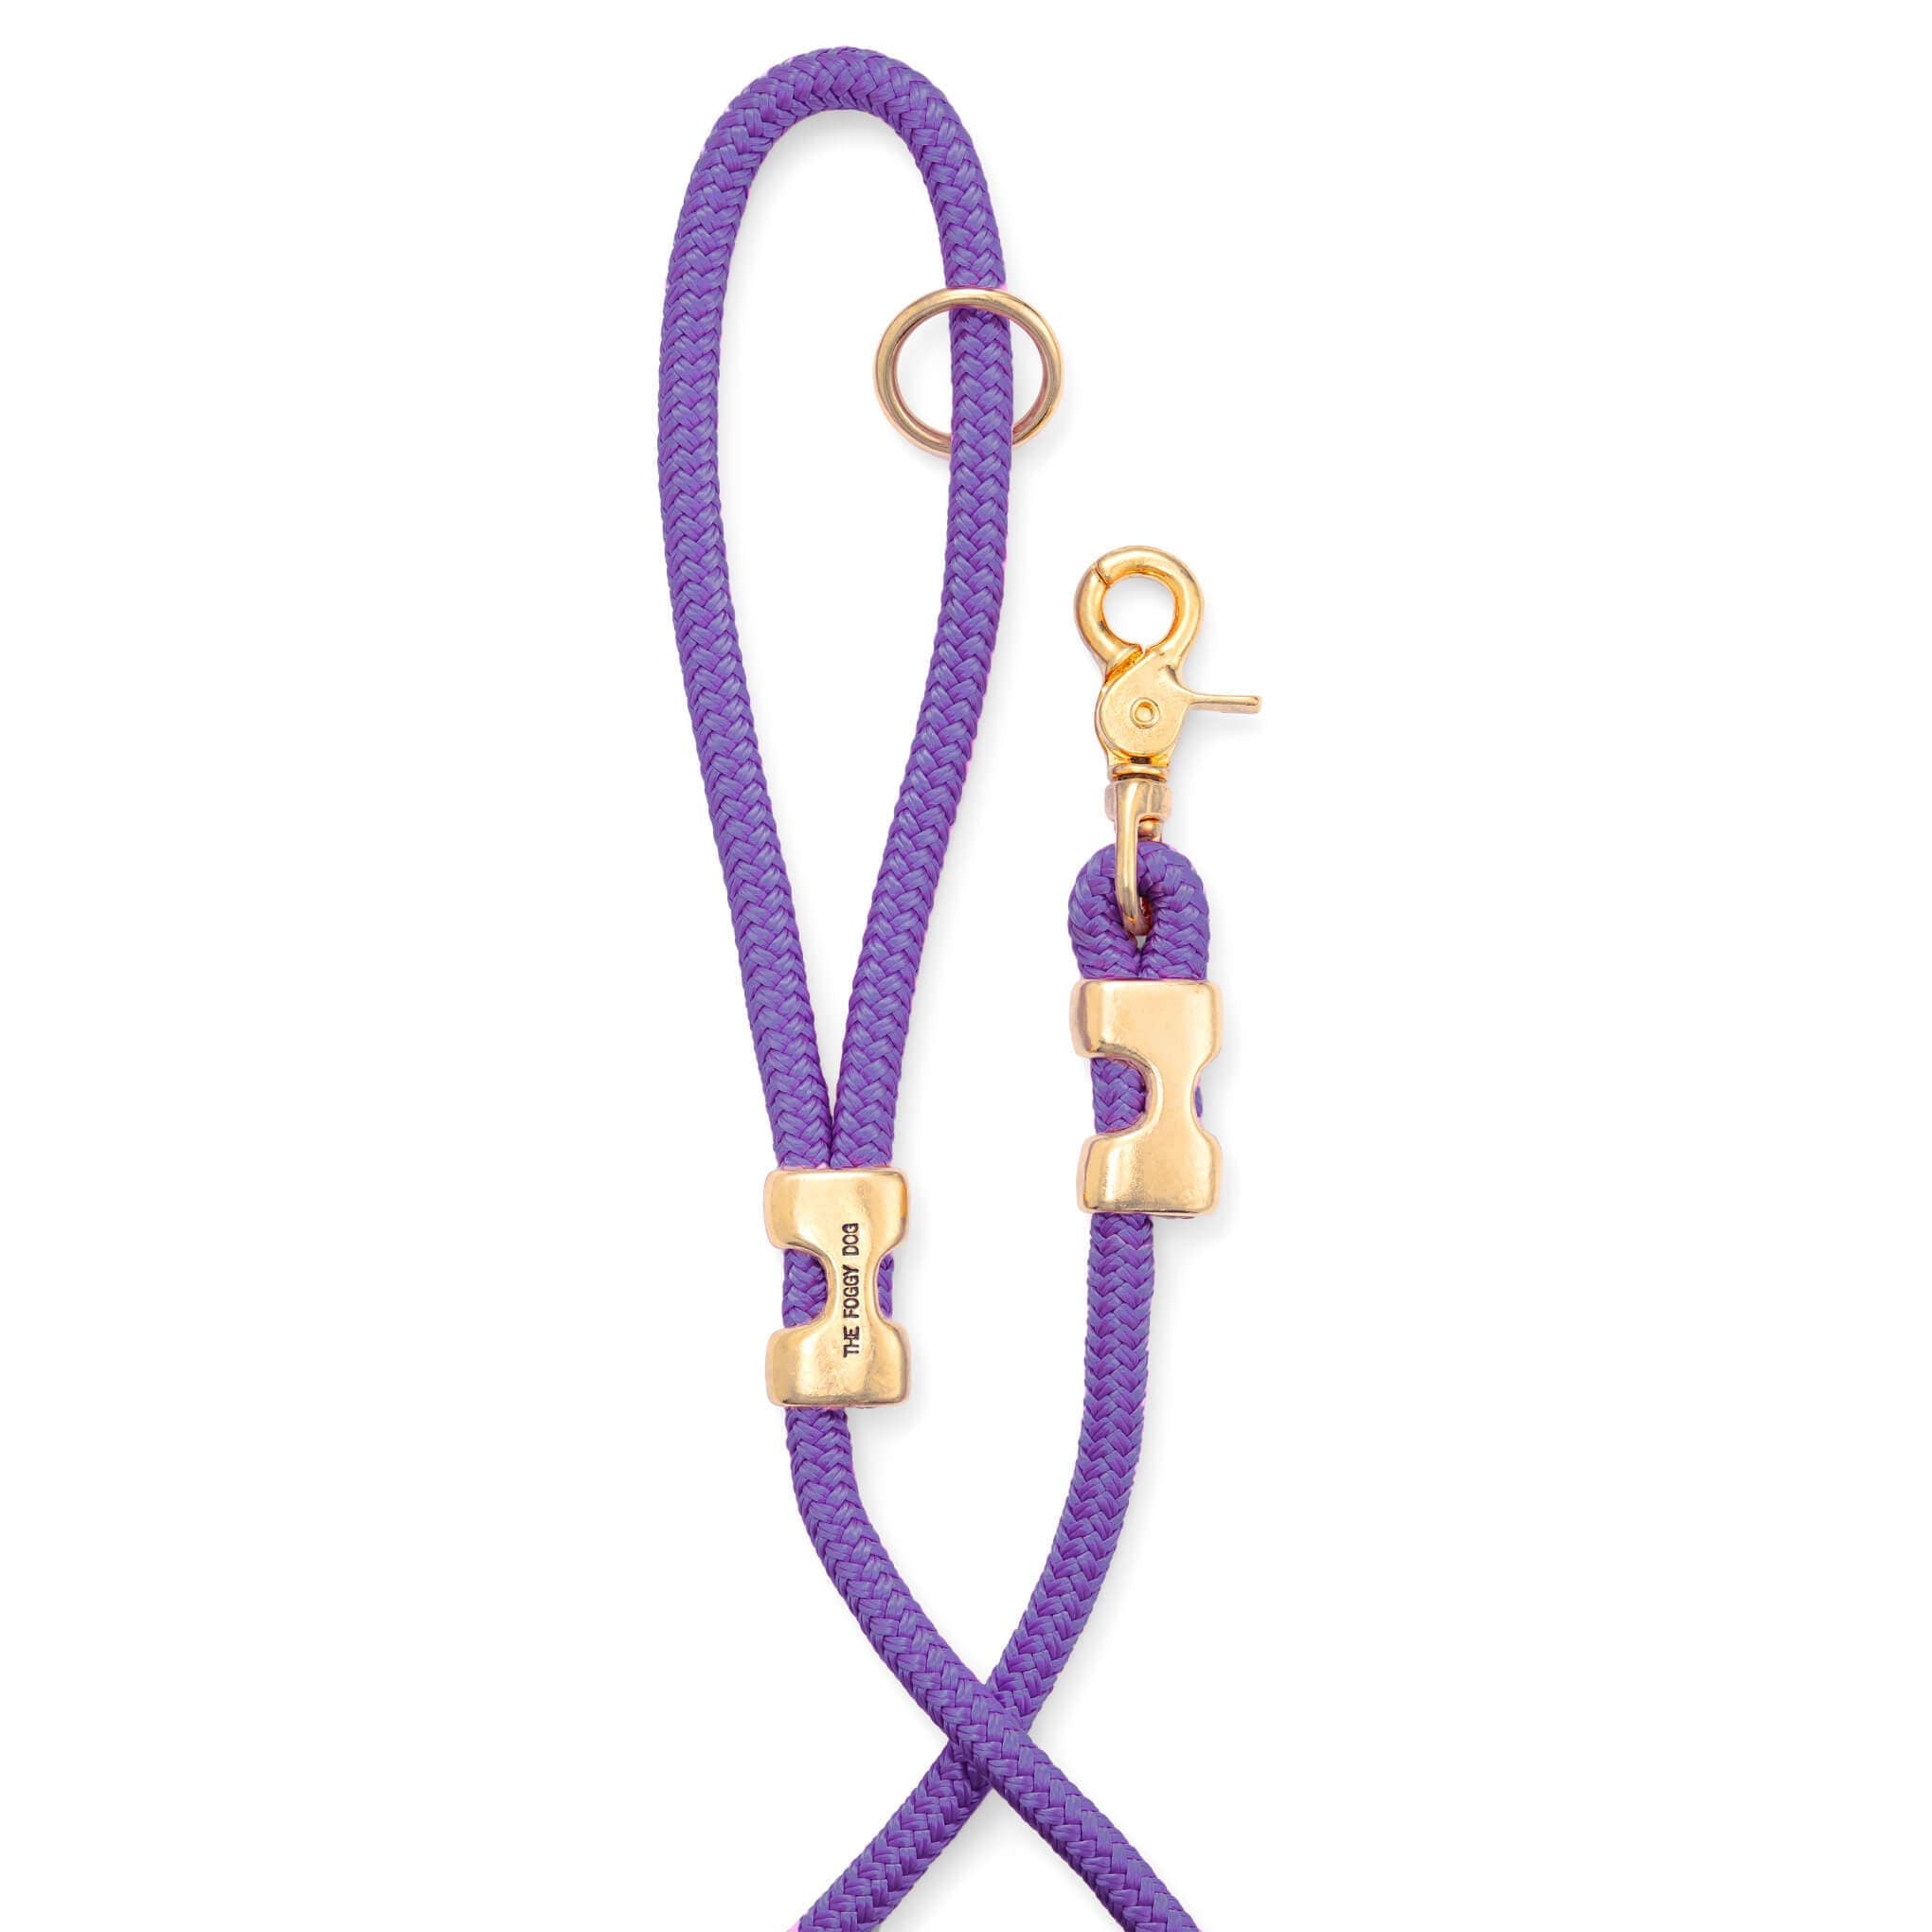 The Foggy Dog Violet Marine Rope Dog Leash